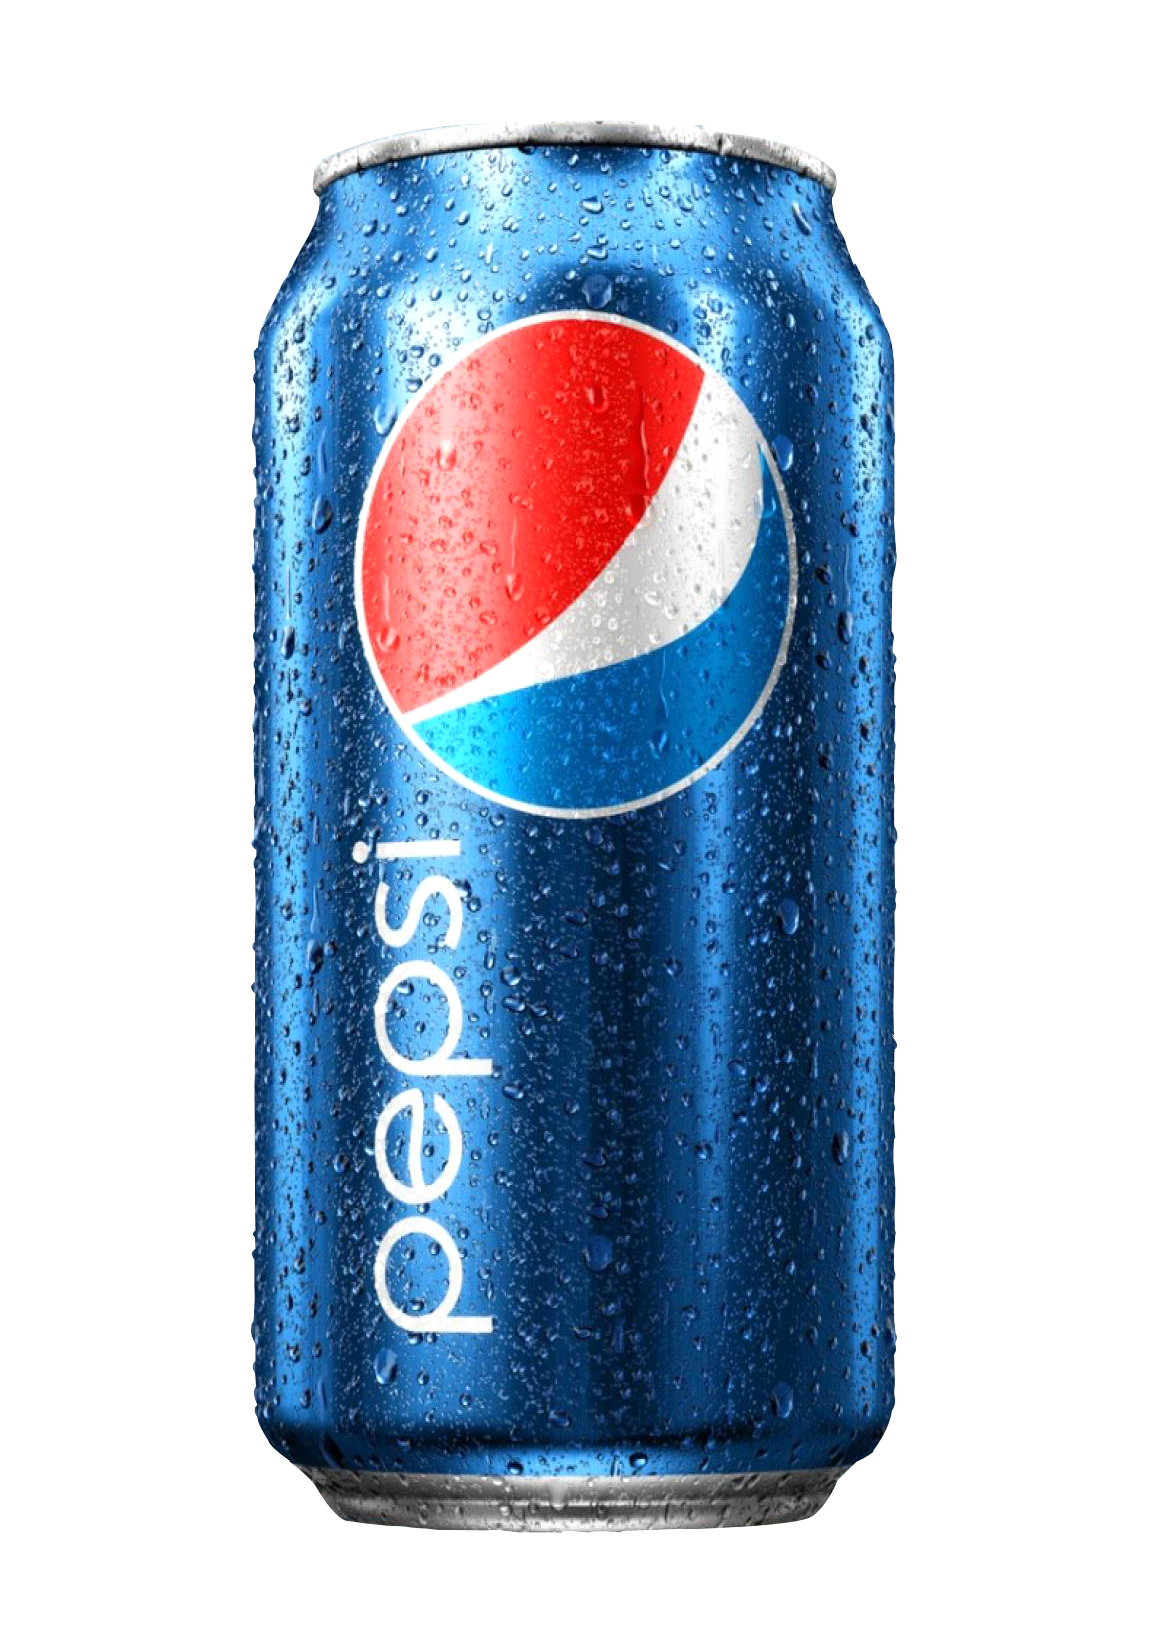 Pepsi Box PNG Transparent ima